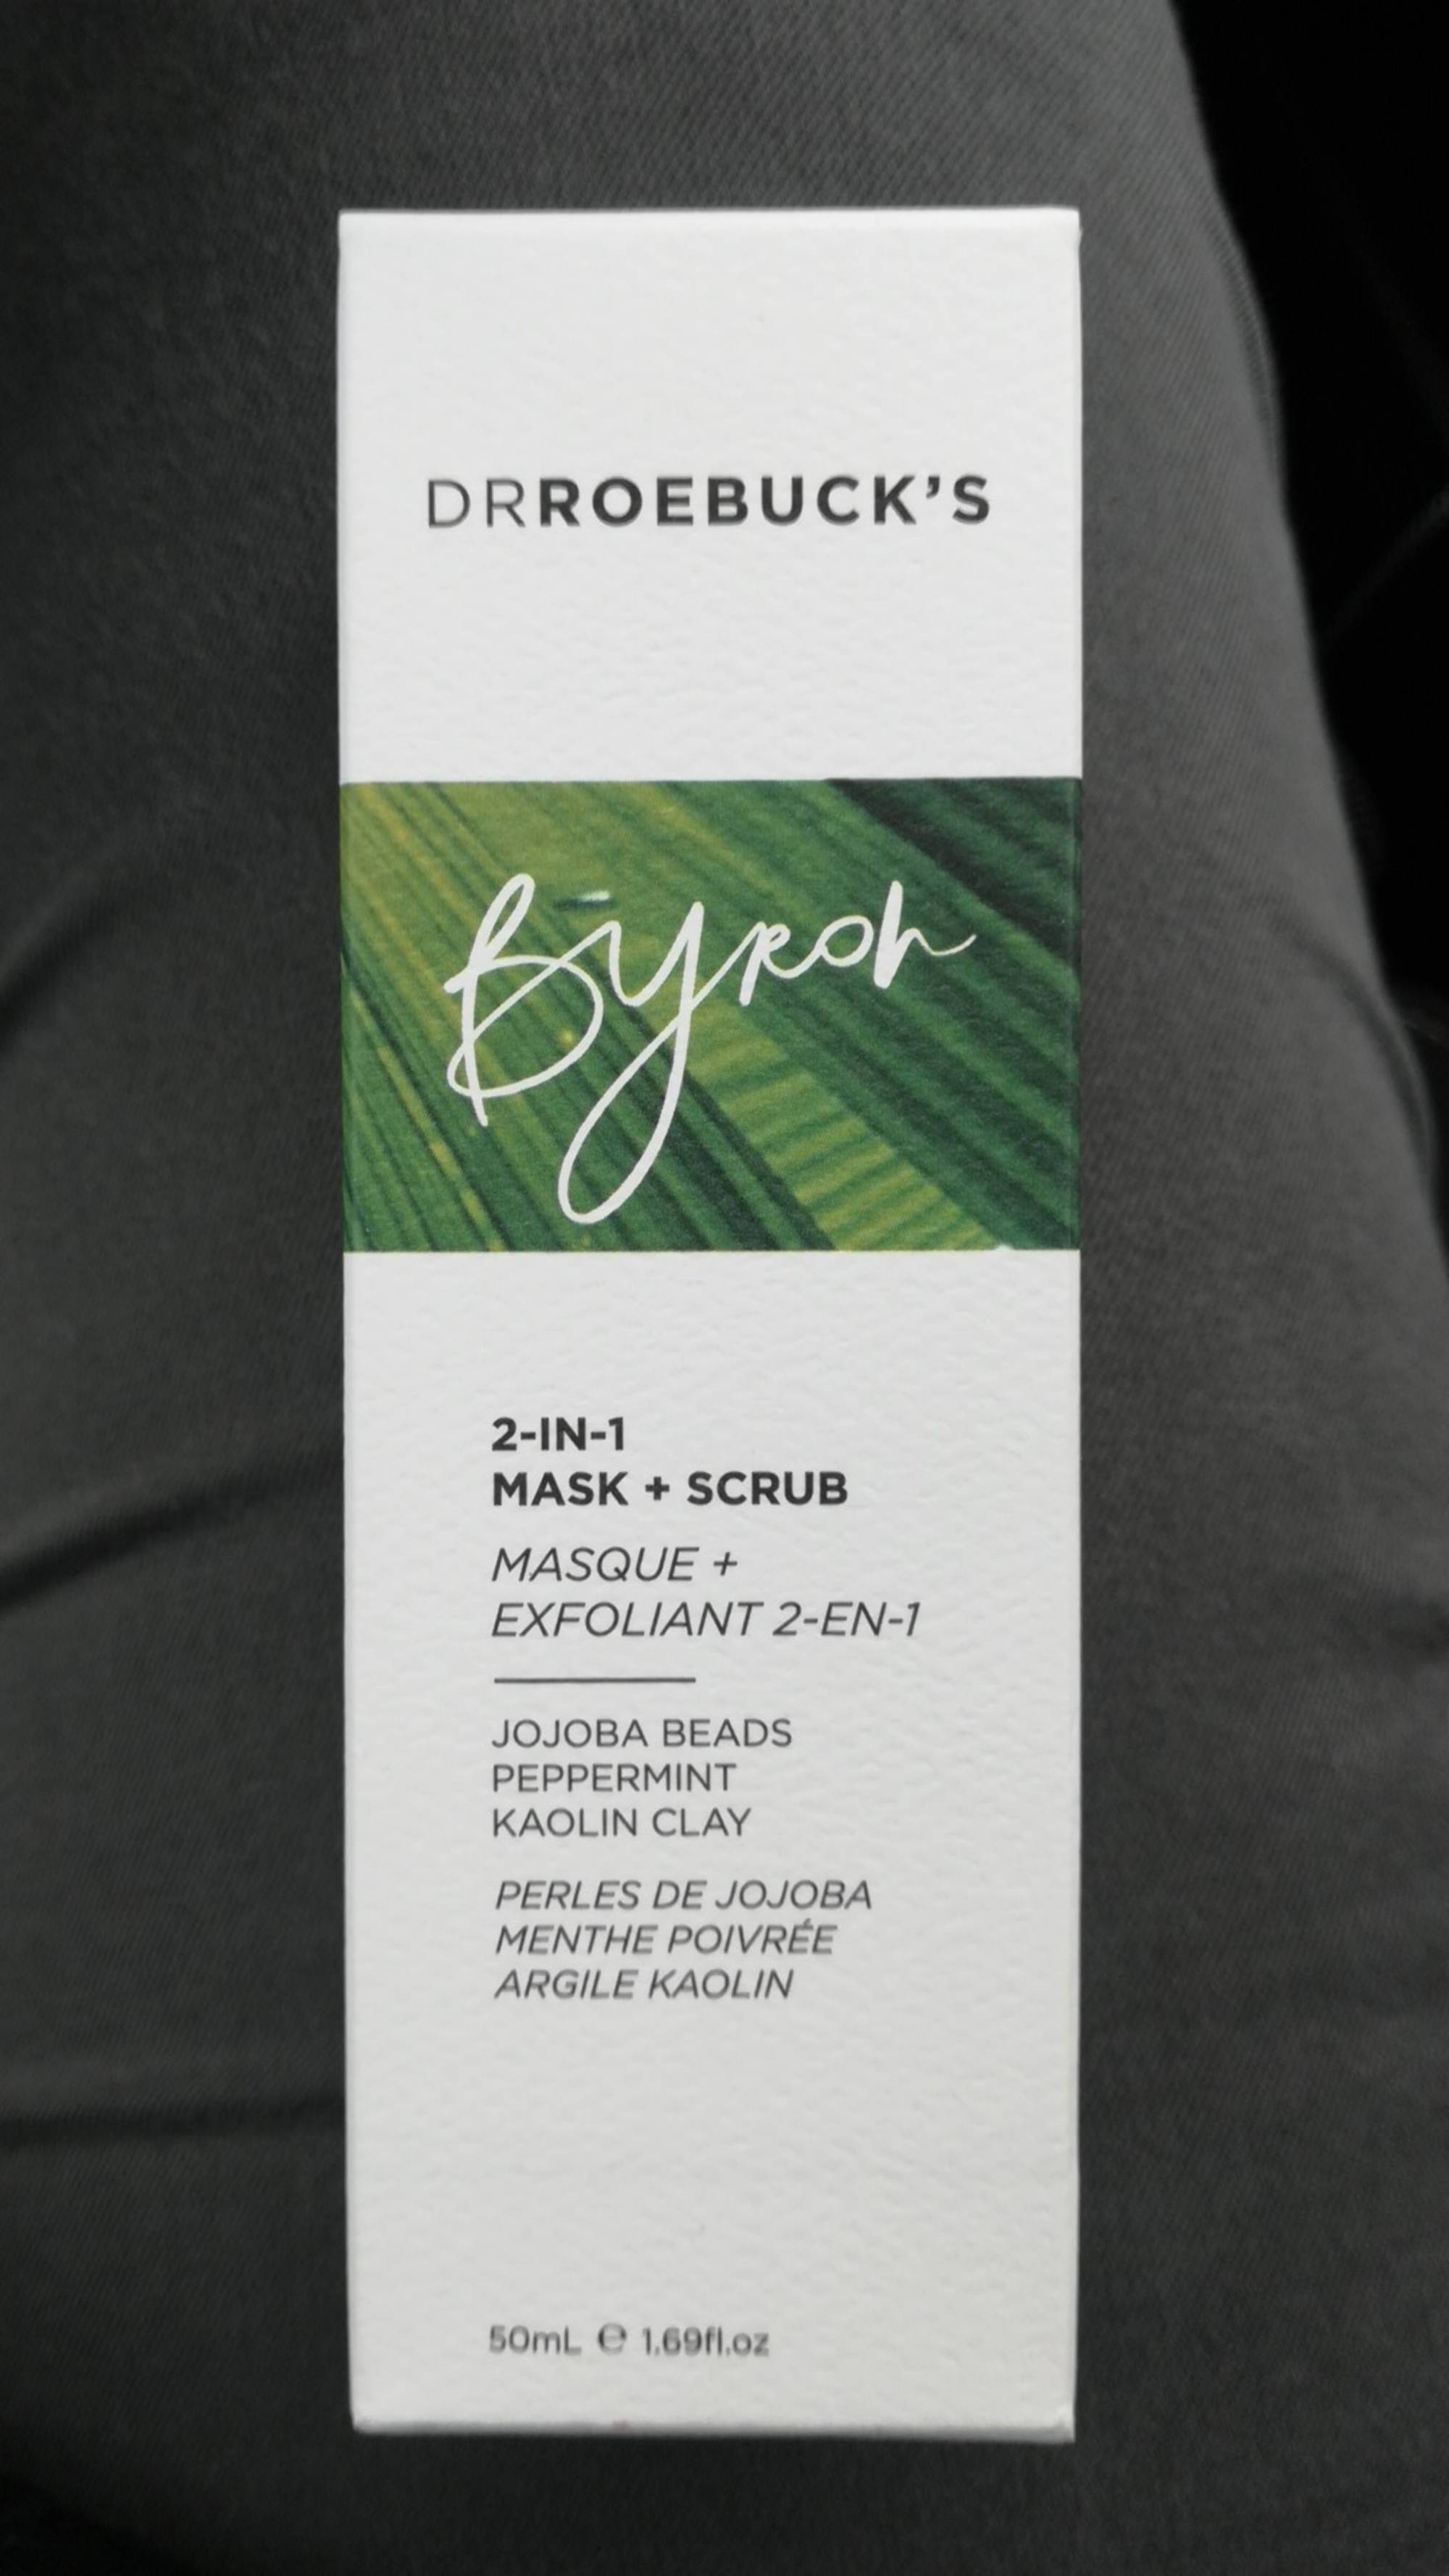 DR ROEBUCK'S - Byron - Masque + exfoliant 2-en-1